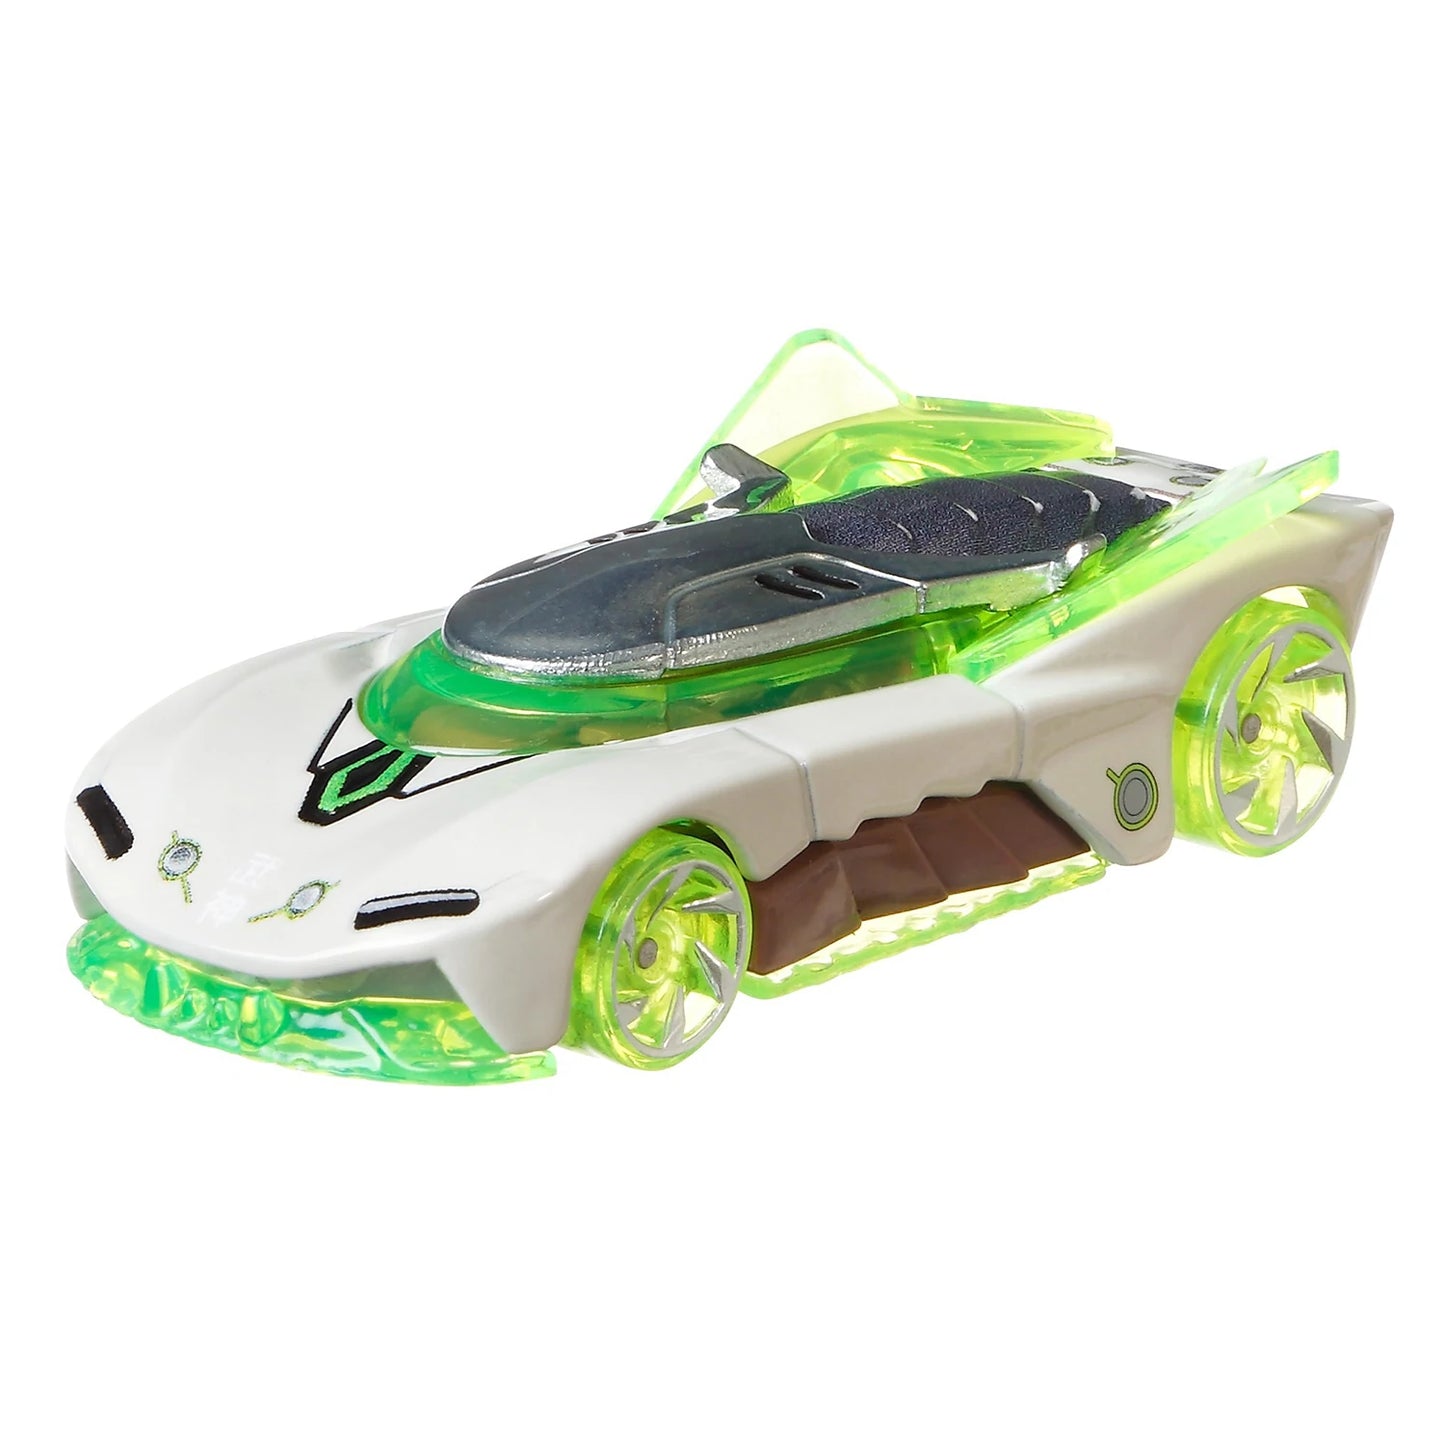 Hot Wheels Video Game Cars - Genji Overwatch Character - Green & White - 1:64 Scale